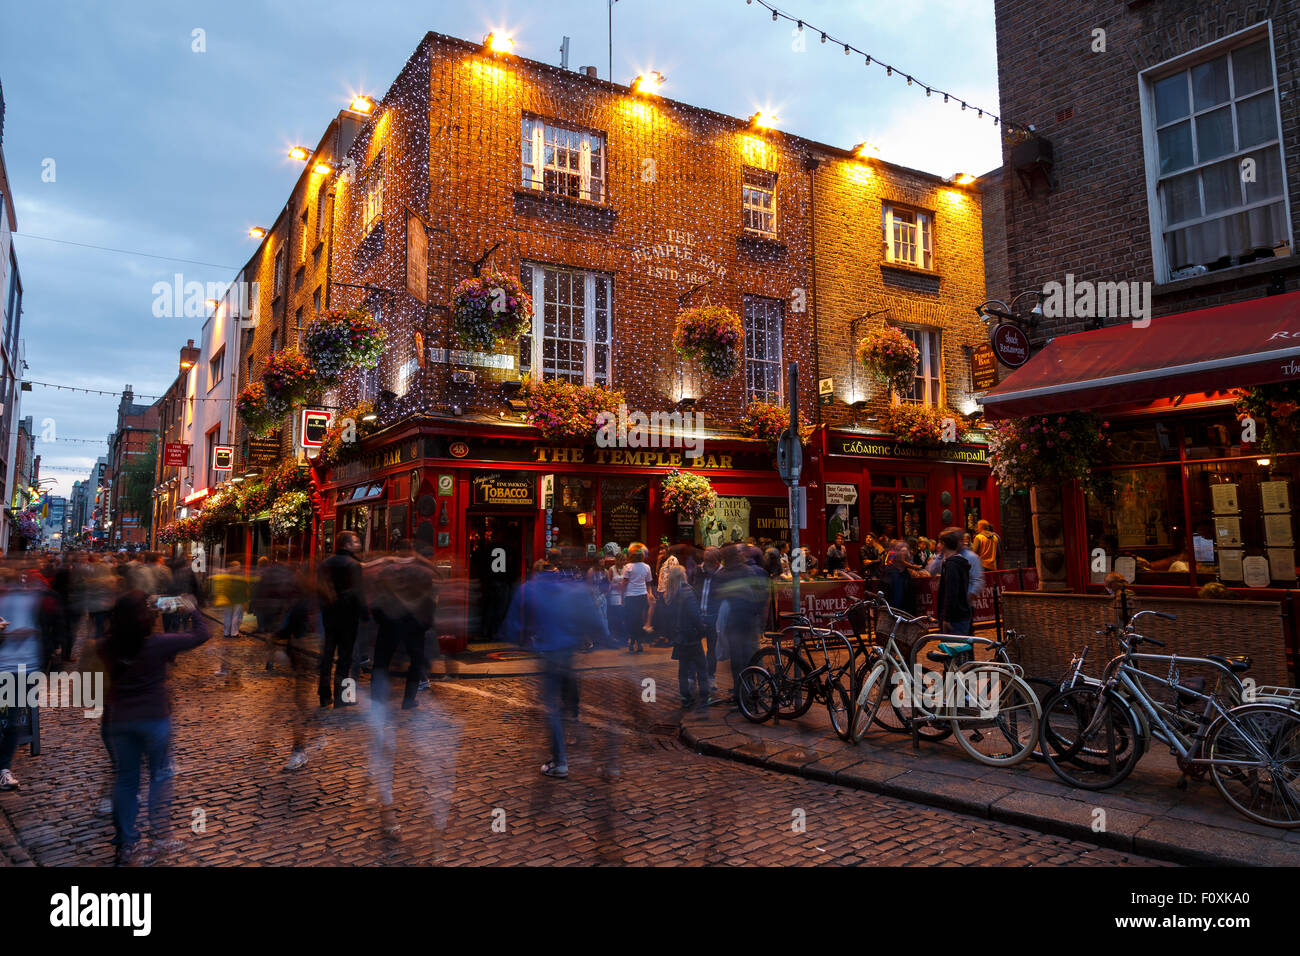 The Temple Bar, Dublin, Ireland, Europe Stock Photo